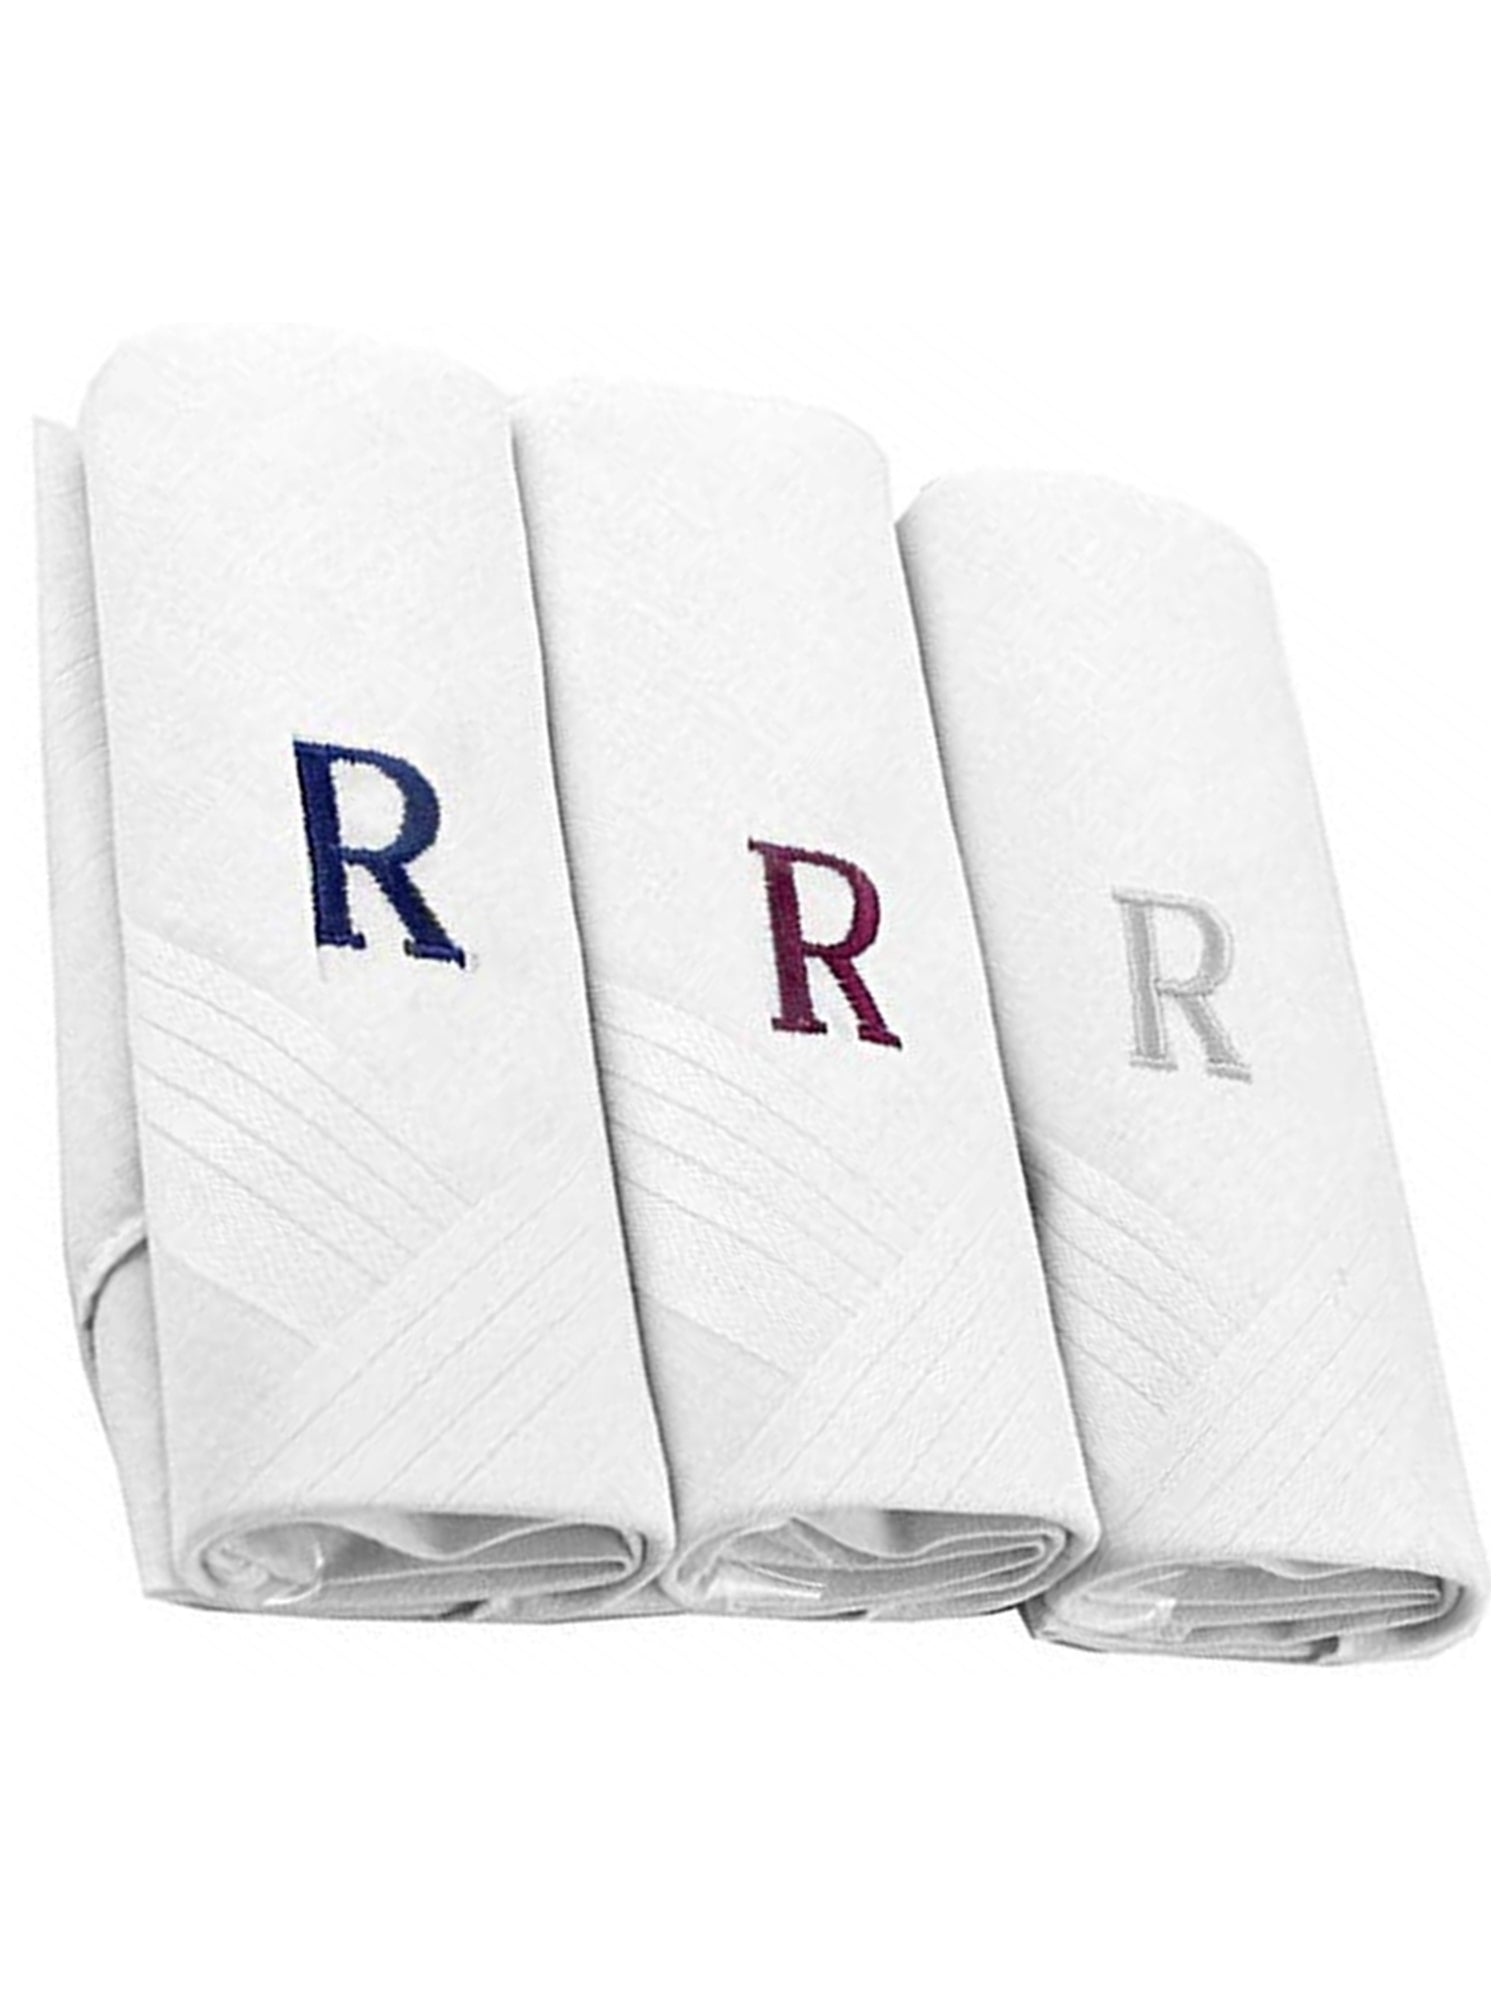 Men's Cotton Monogrammed Handkerchiefs Initial Letter Hanky Handkerchiefs TheDapperTie White R 2 x 3 Pack  